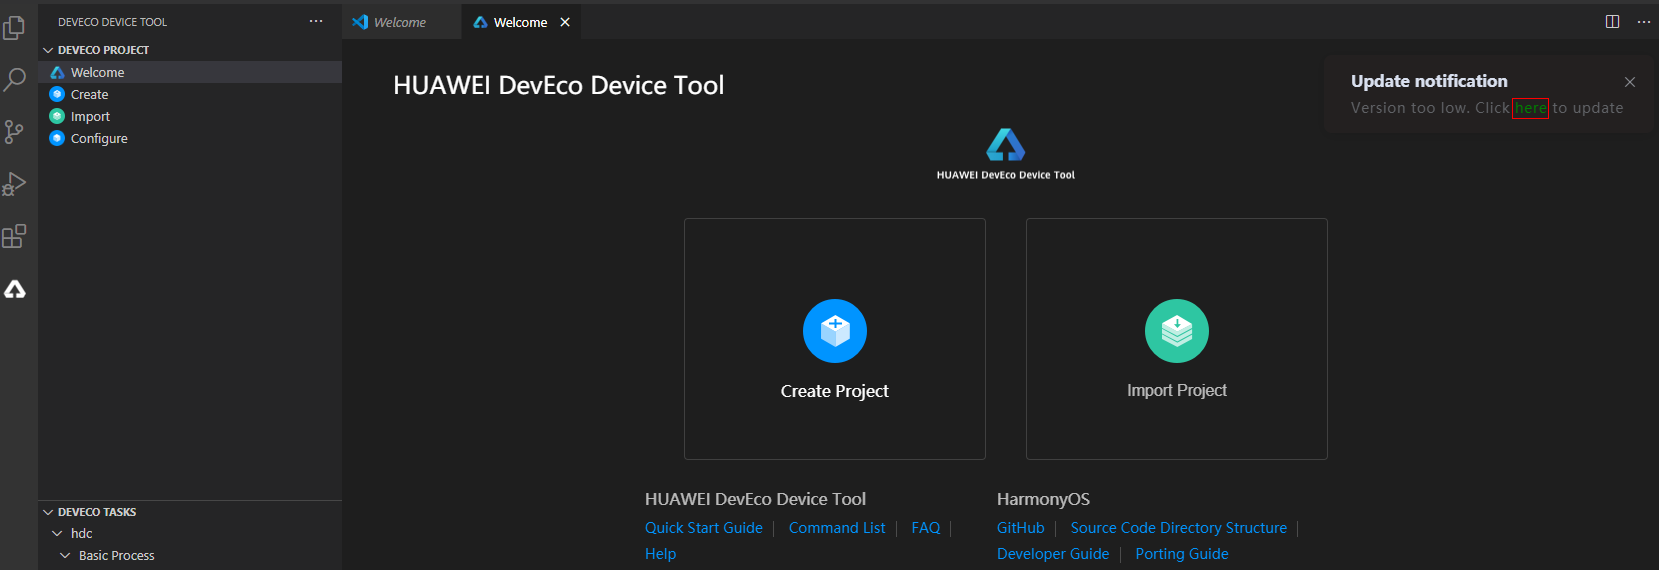 HUAWEI DevEco Device Tool 2.0 Beta1上线了，快来升级体验吧！-开源基础软件社区